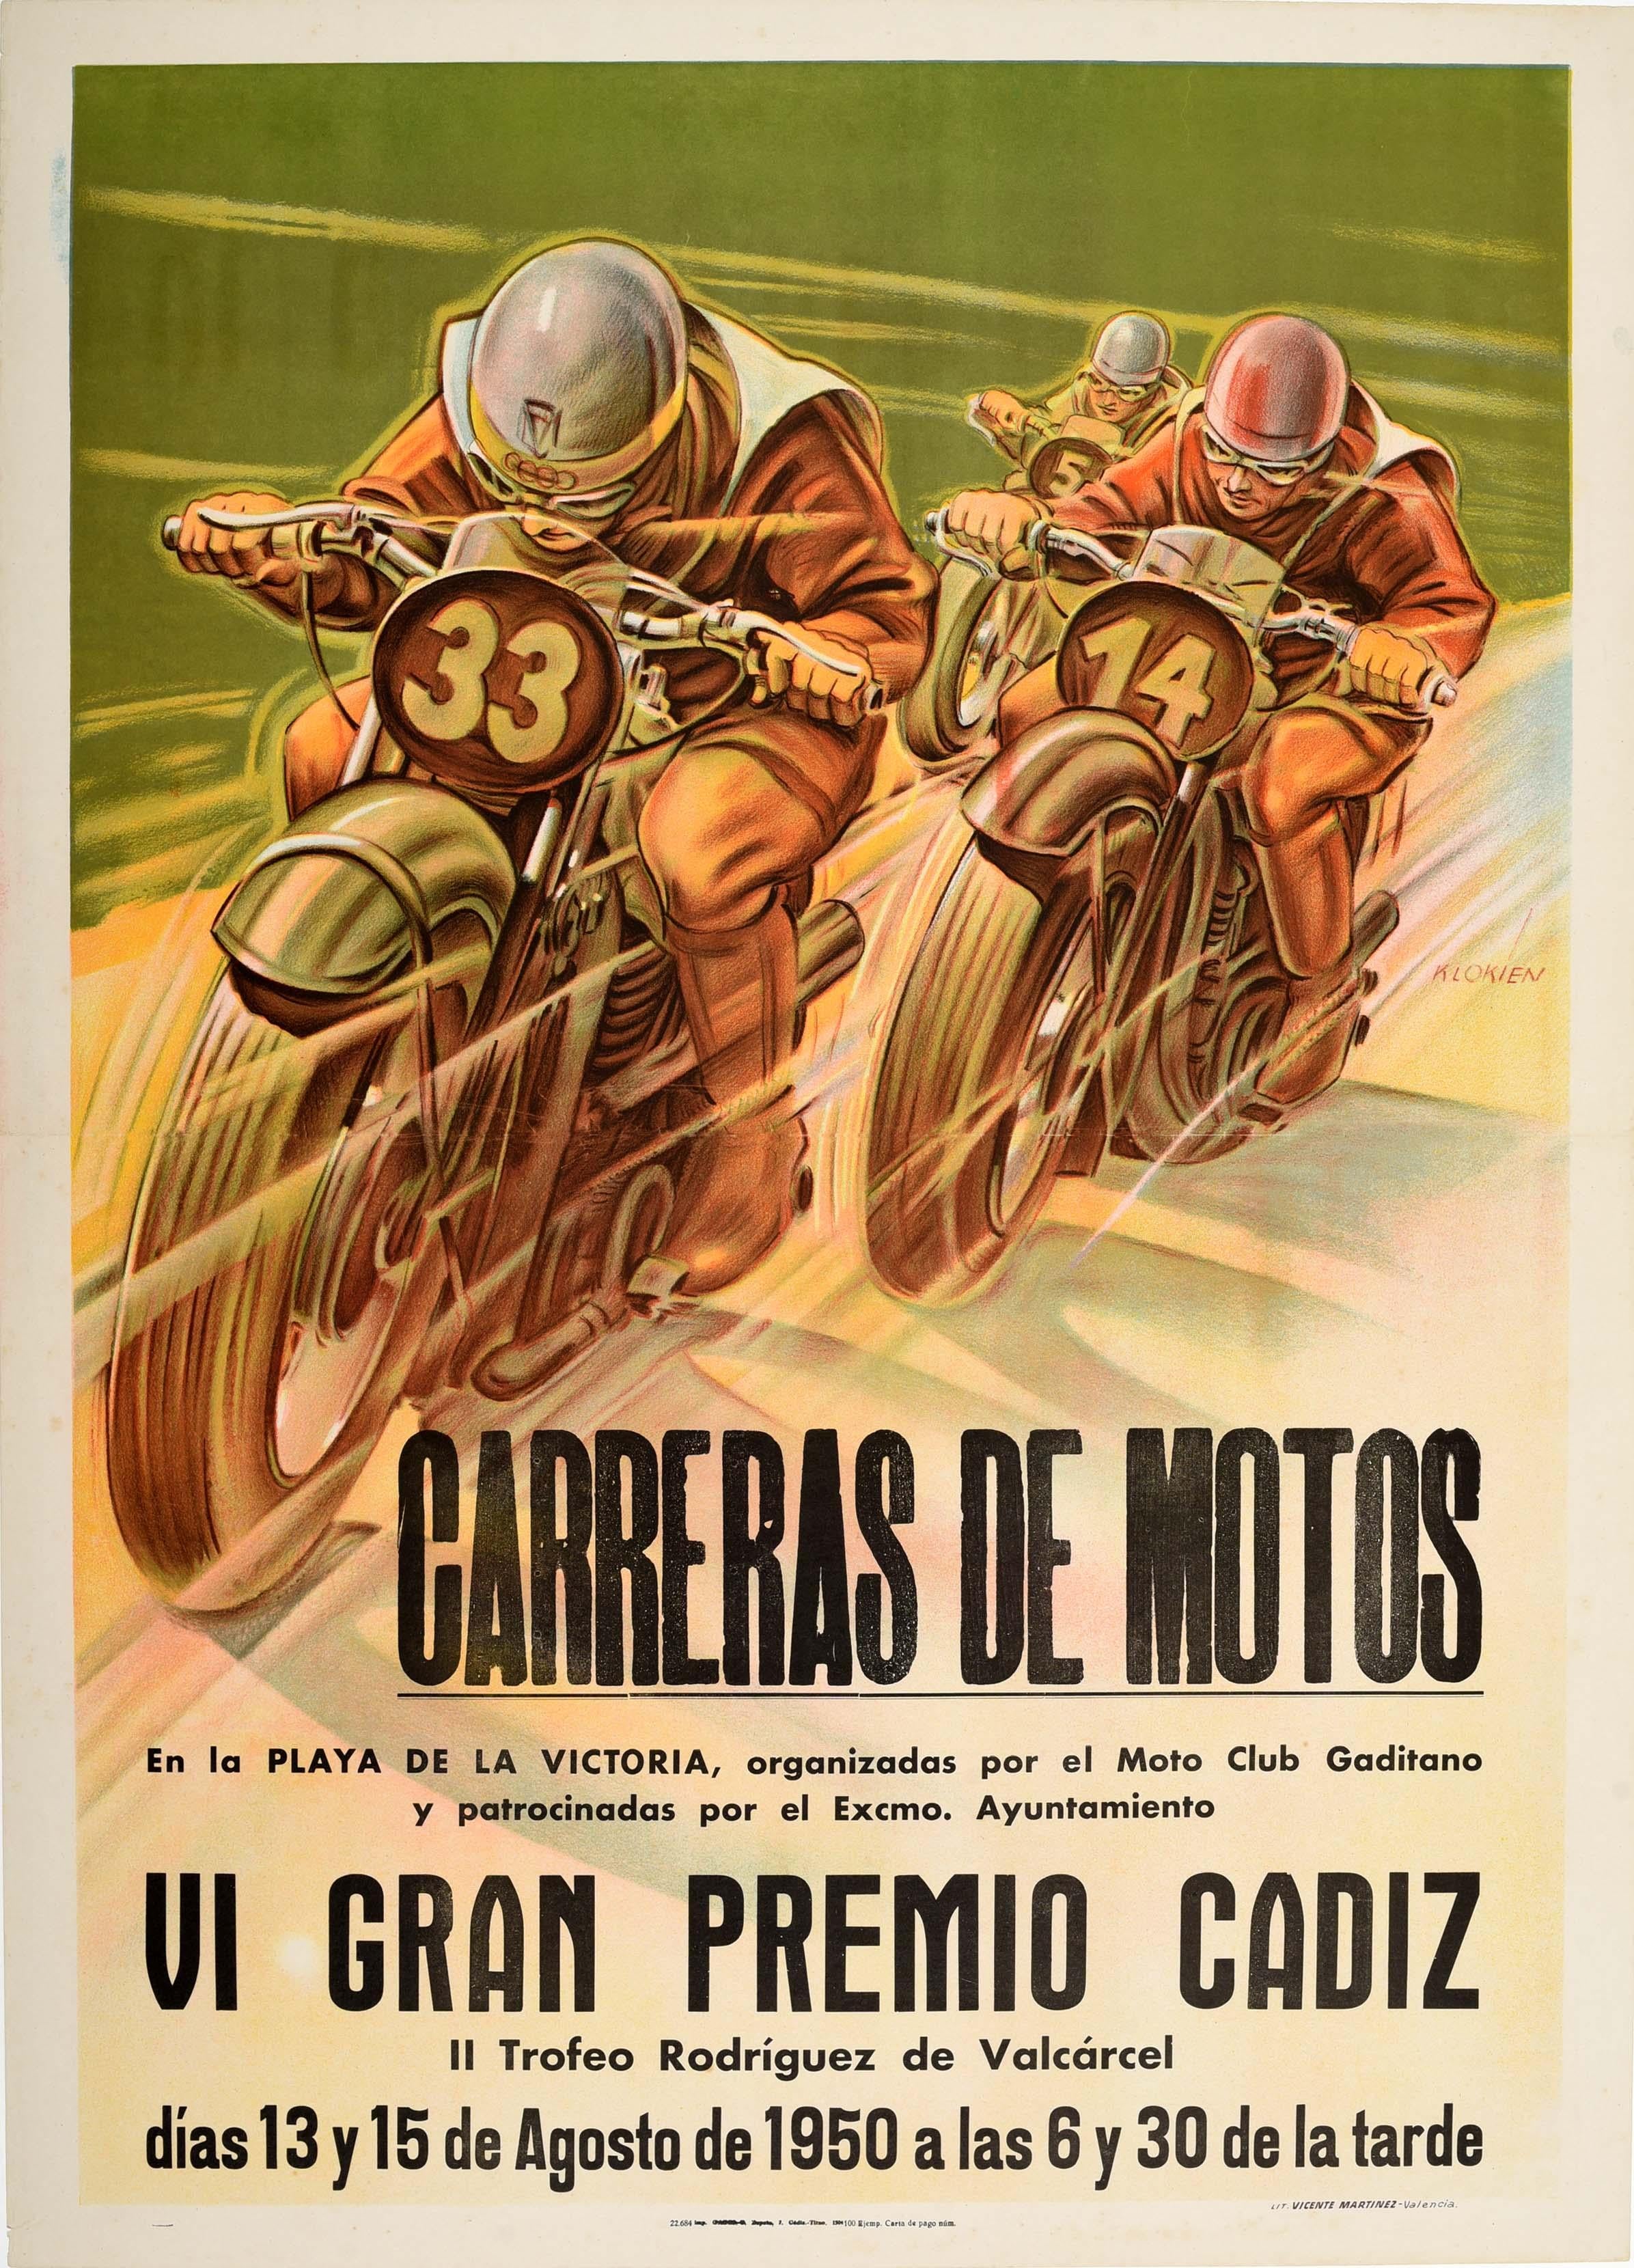 Original vintage motorsport poster advertising the Motorcycle Racing VI Grand Prix Cadiz / Carreras De Motos VI Gran Premio Cadiz that took place from 13 to 15 August 1950 featuring a dynamic design depicting three motorcycle drivers racing their